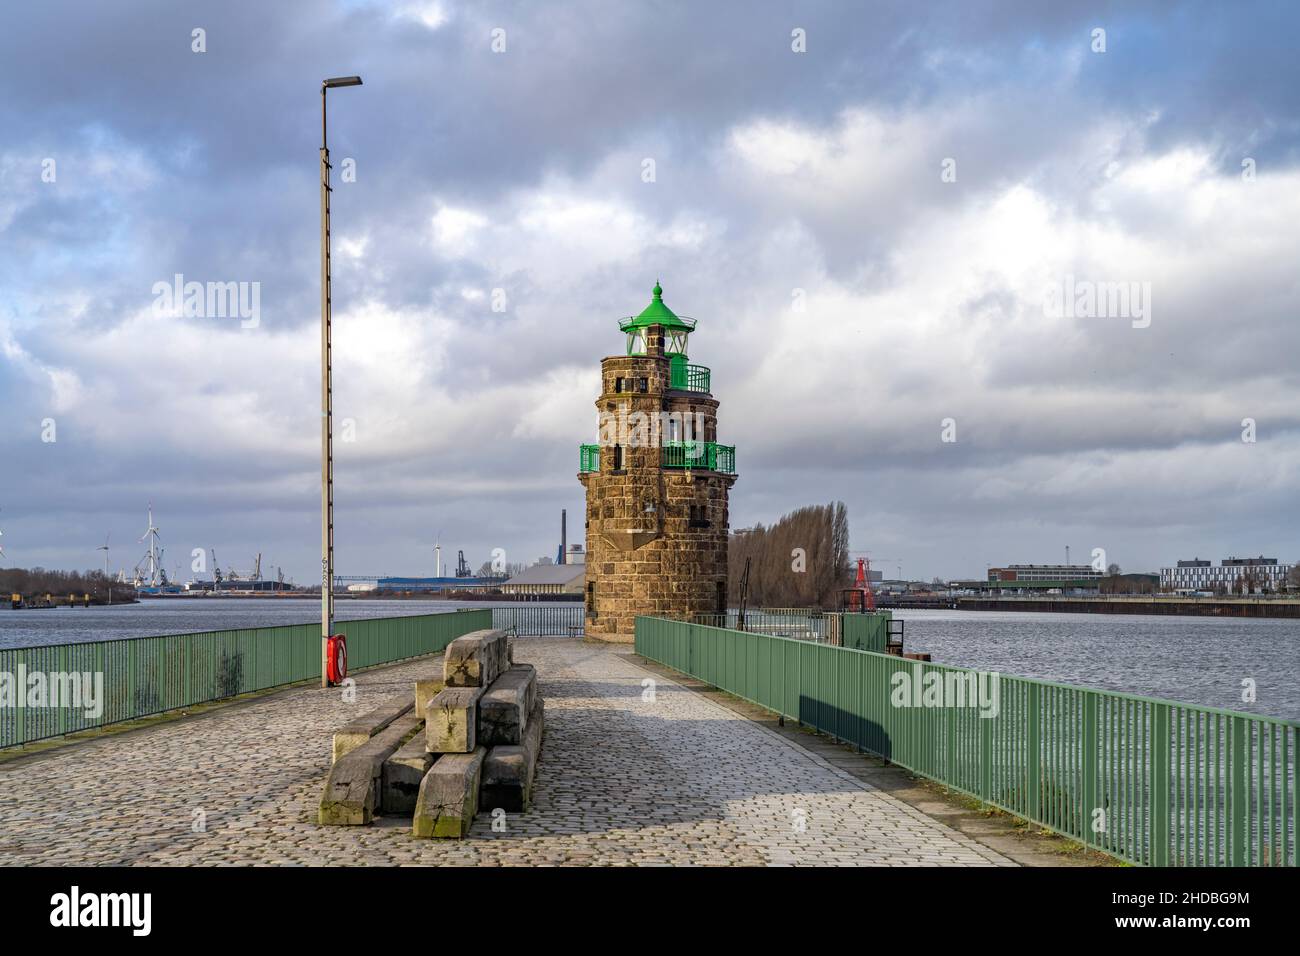 Leuchtturm Molenturm am Waller Sand der Überseestadt, Freie Hansestadt Bremen, Deutschland, Europa |  Molenturm Lighthouse at Waller Sand Riverfront P Stock Photo